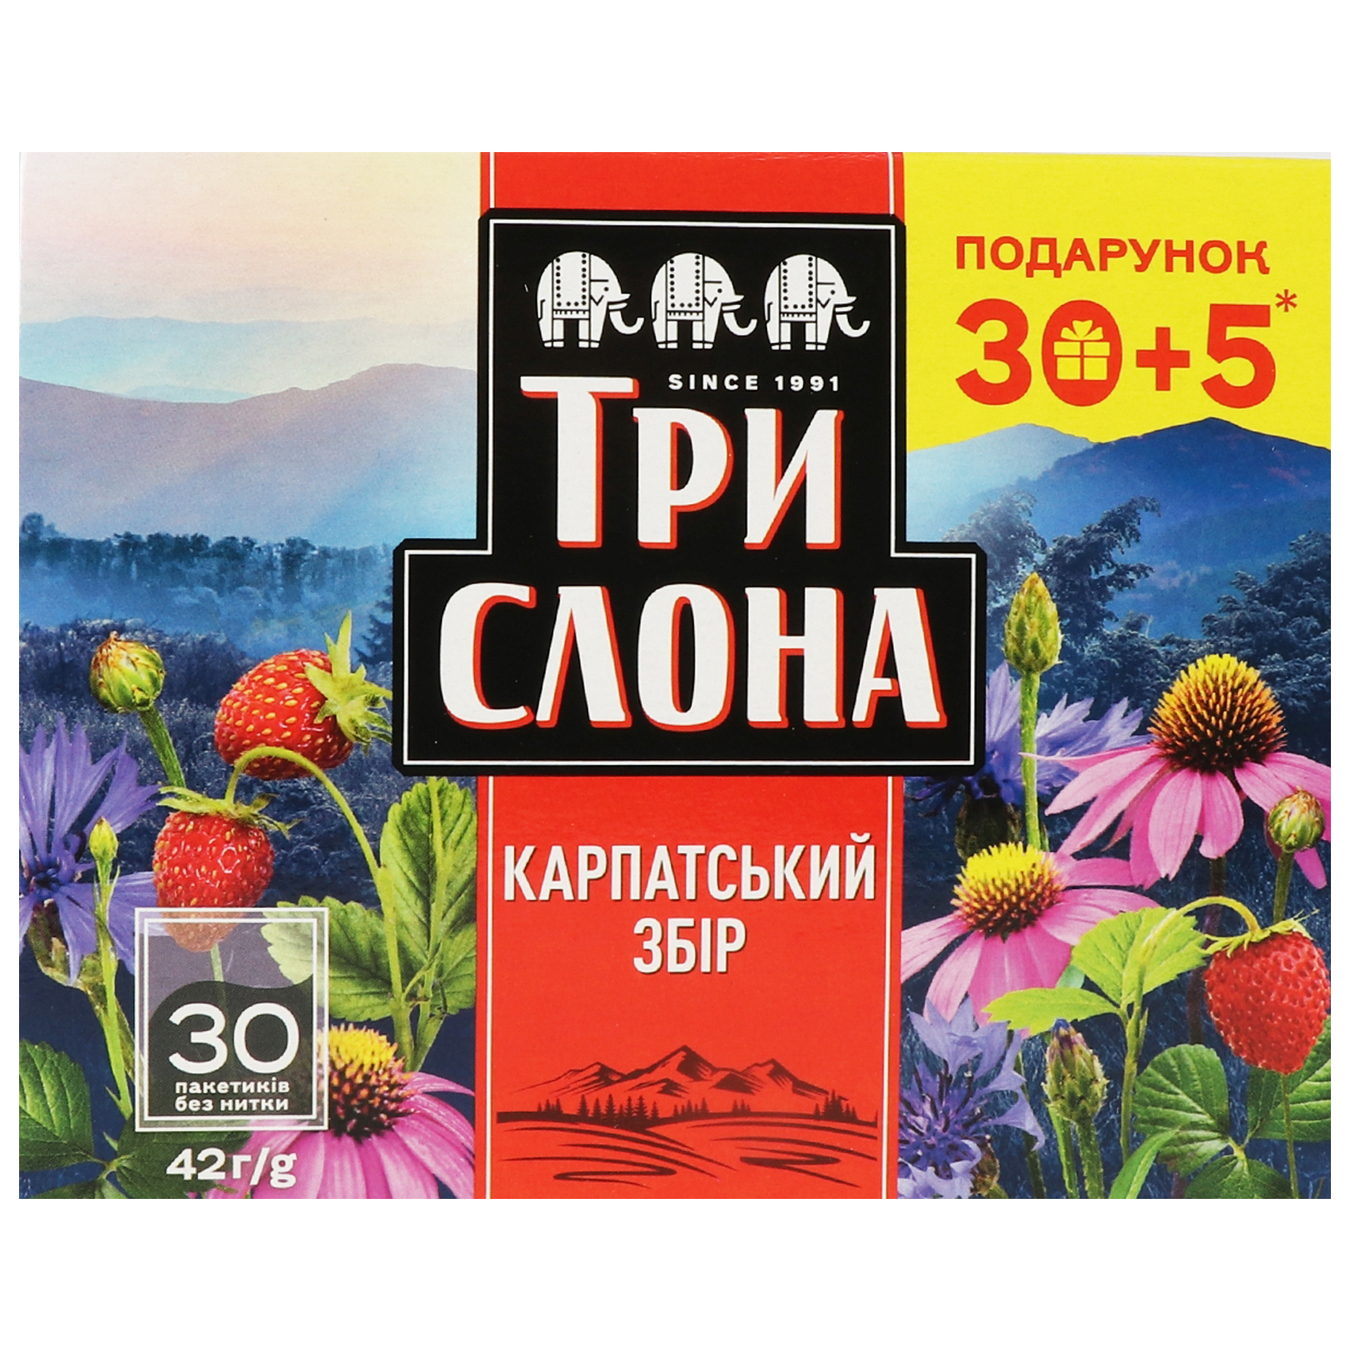 Tea Three elephants Carpathian herbal collection35*1.4 g